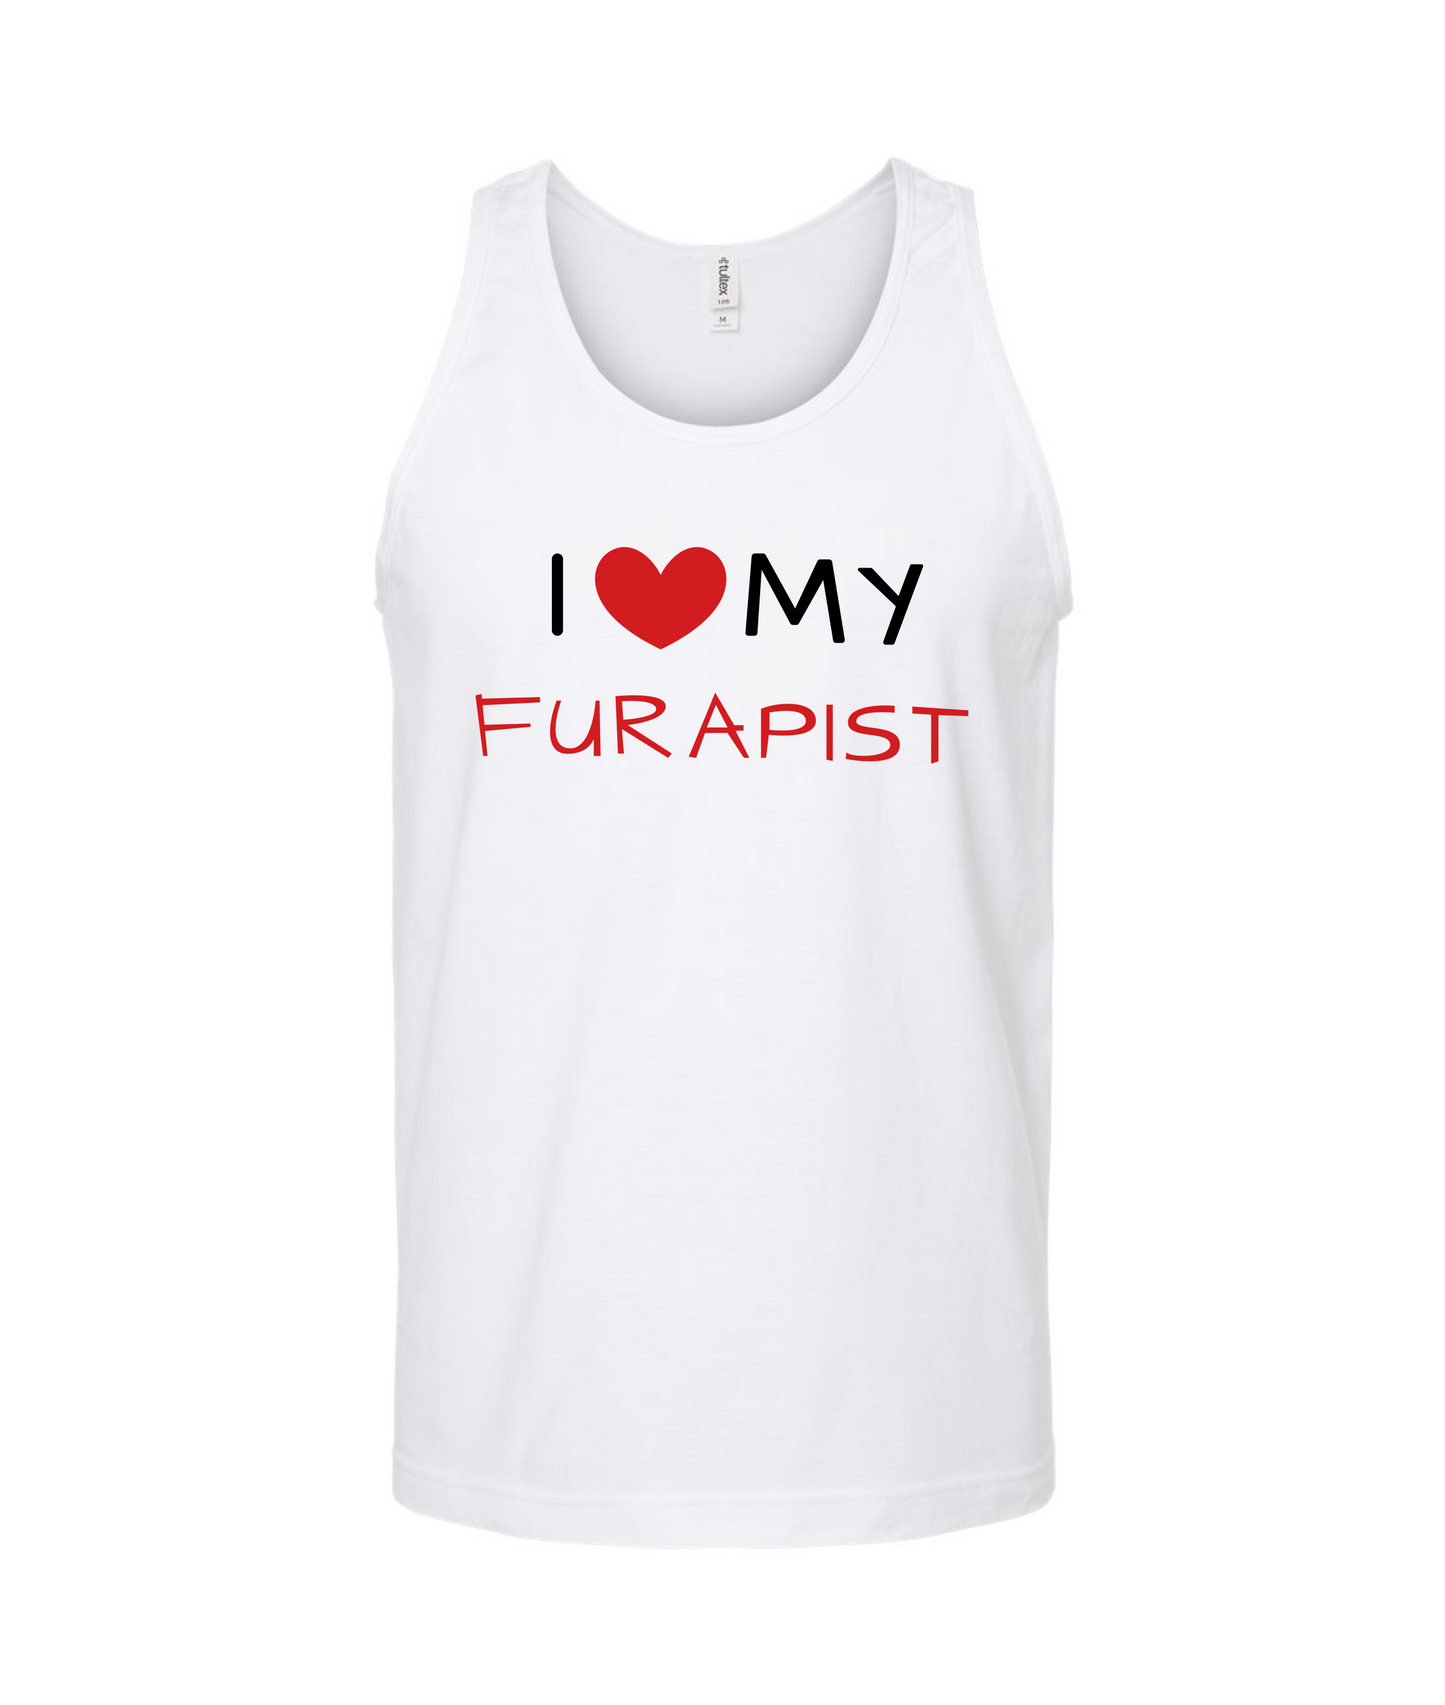 pyschofurapy.com - I <3 MY FURAPIST - White Tank Top